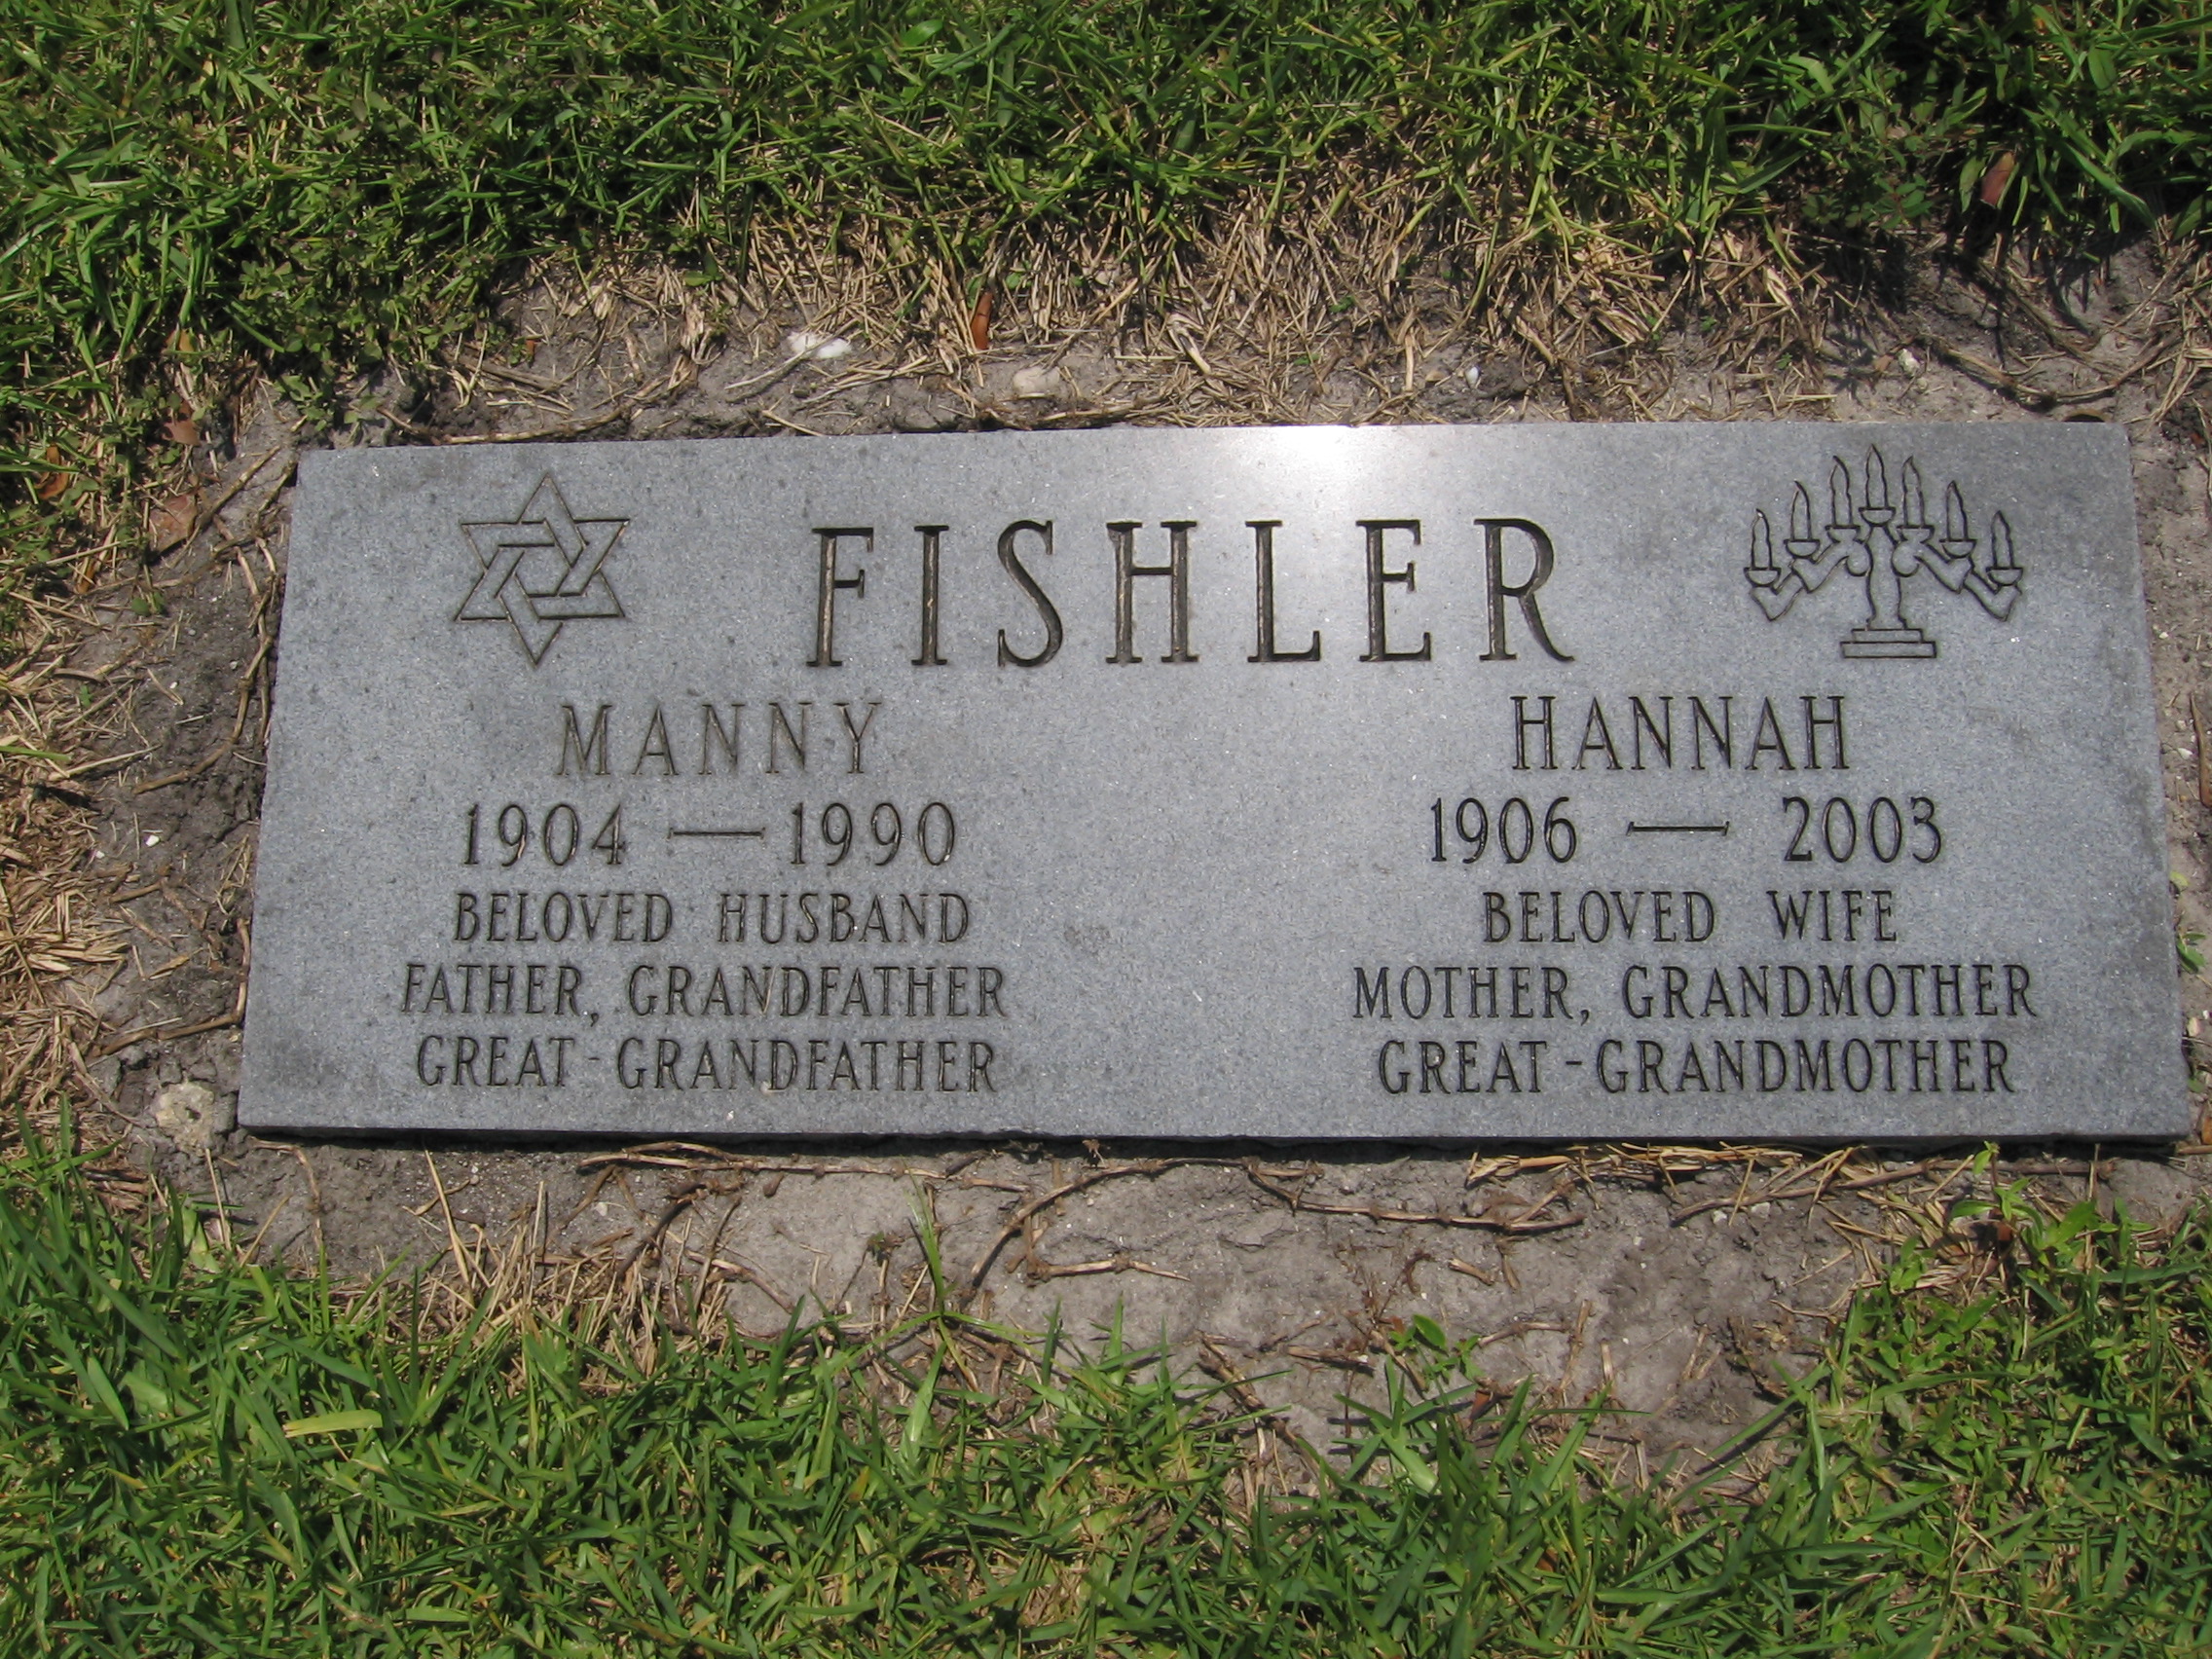 Manny Fishler